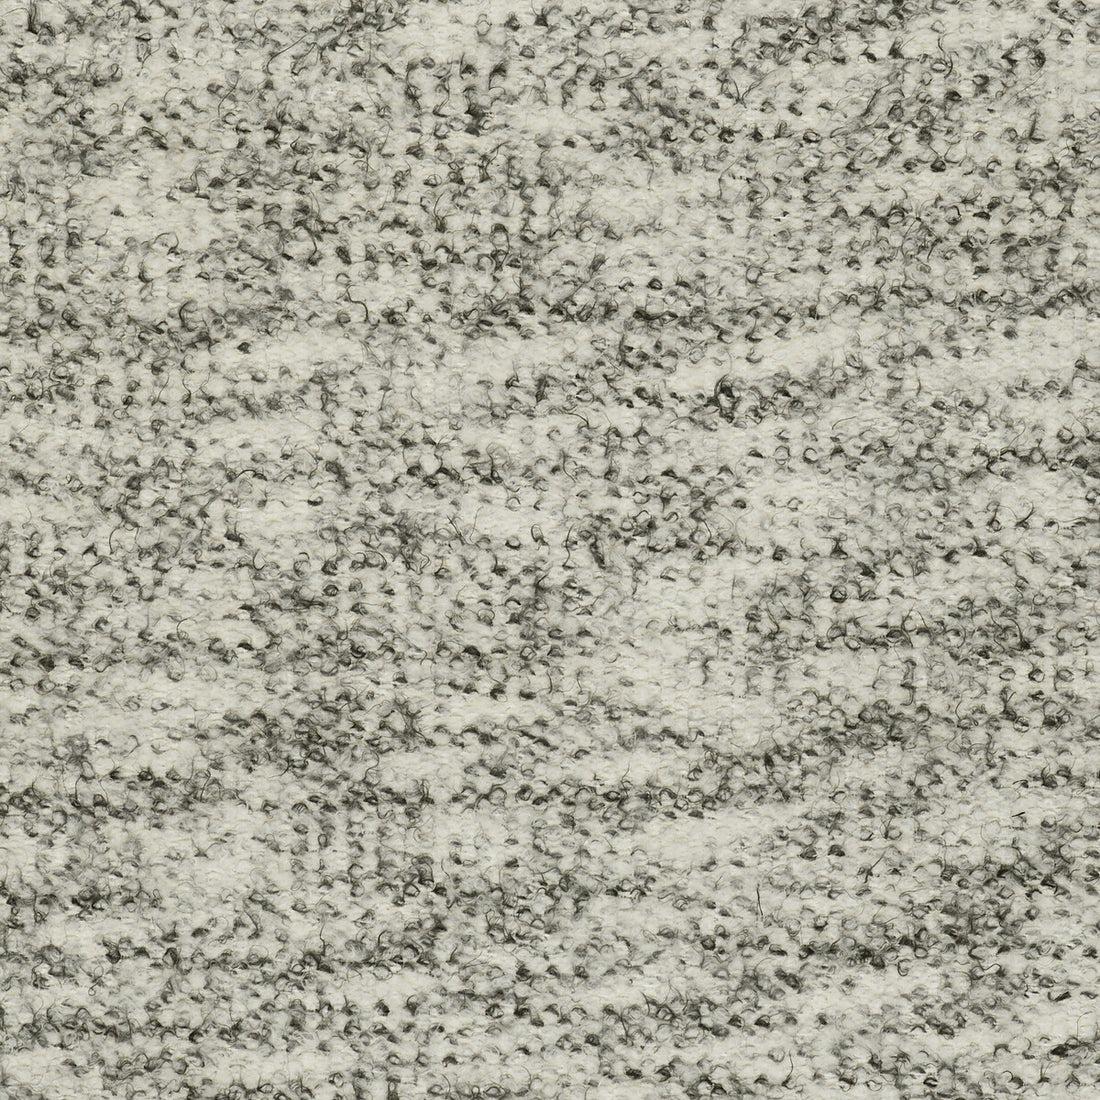 Favila fabric in blanco color - pattern LCT1004.002.0 - by Gaston y Daniela in the Lorenzo Castillo V collection